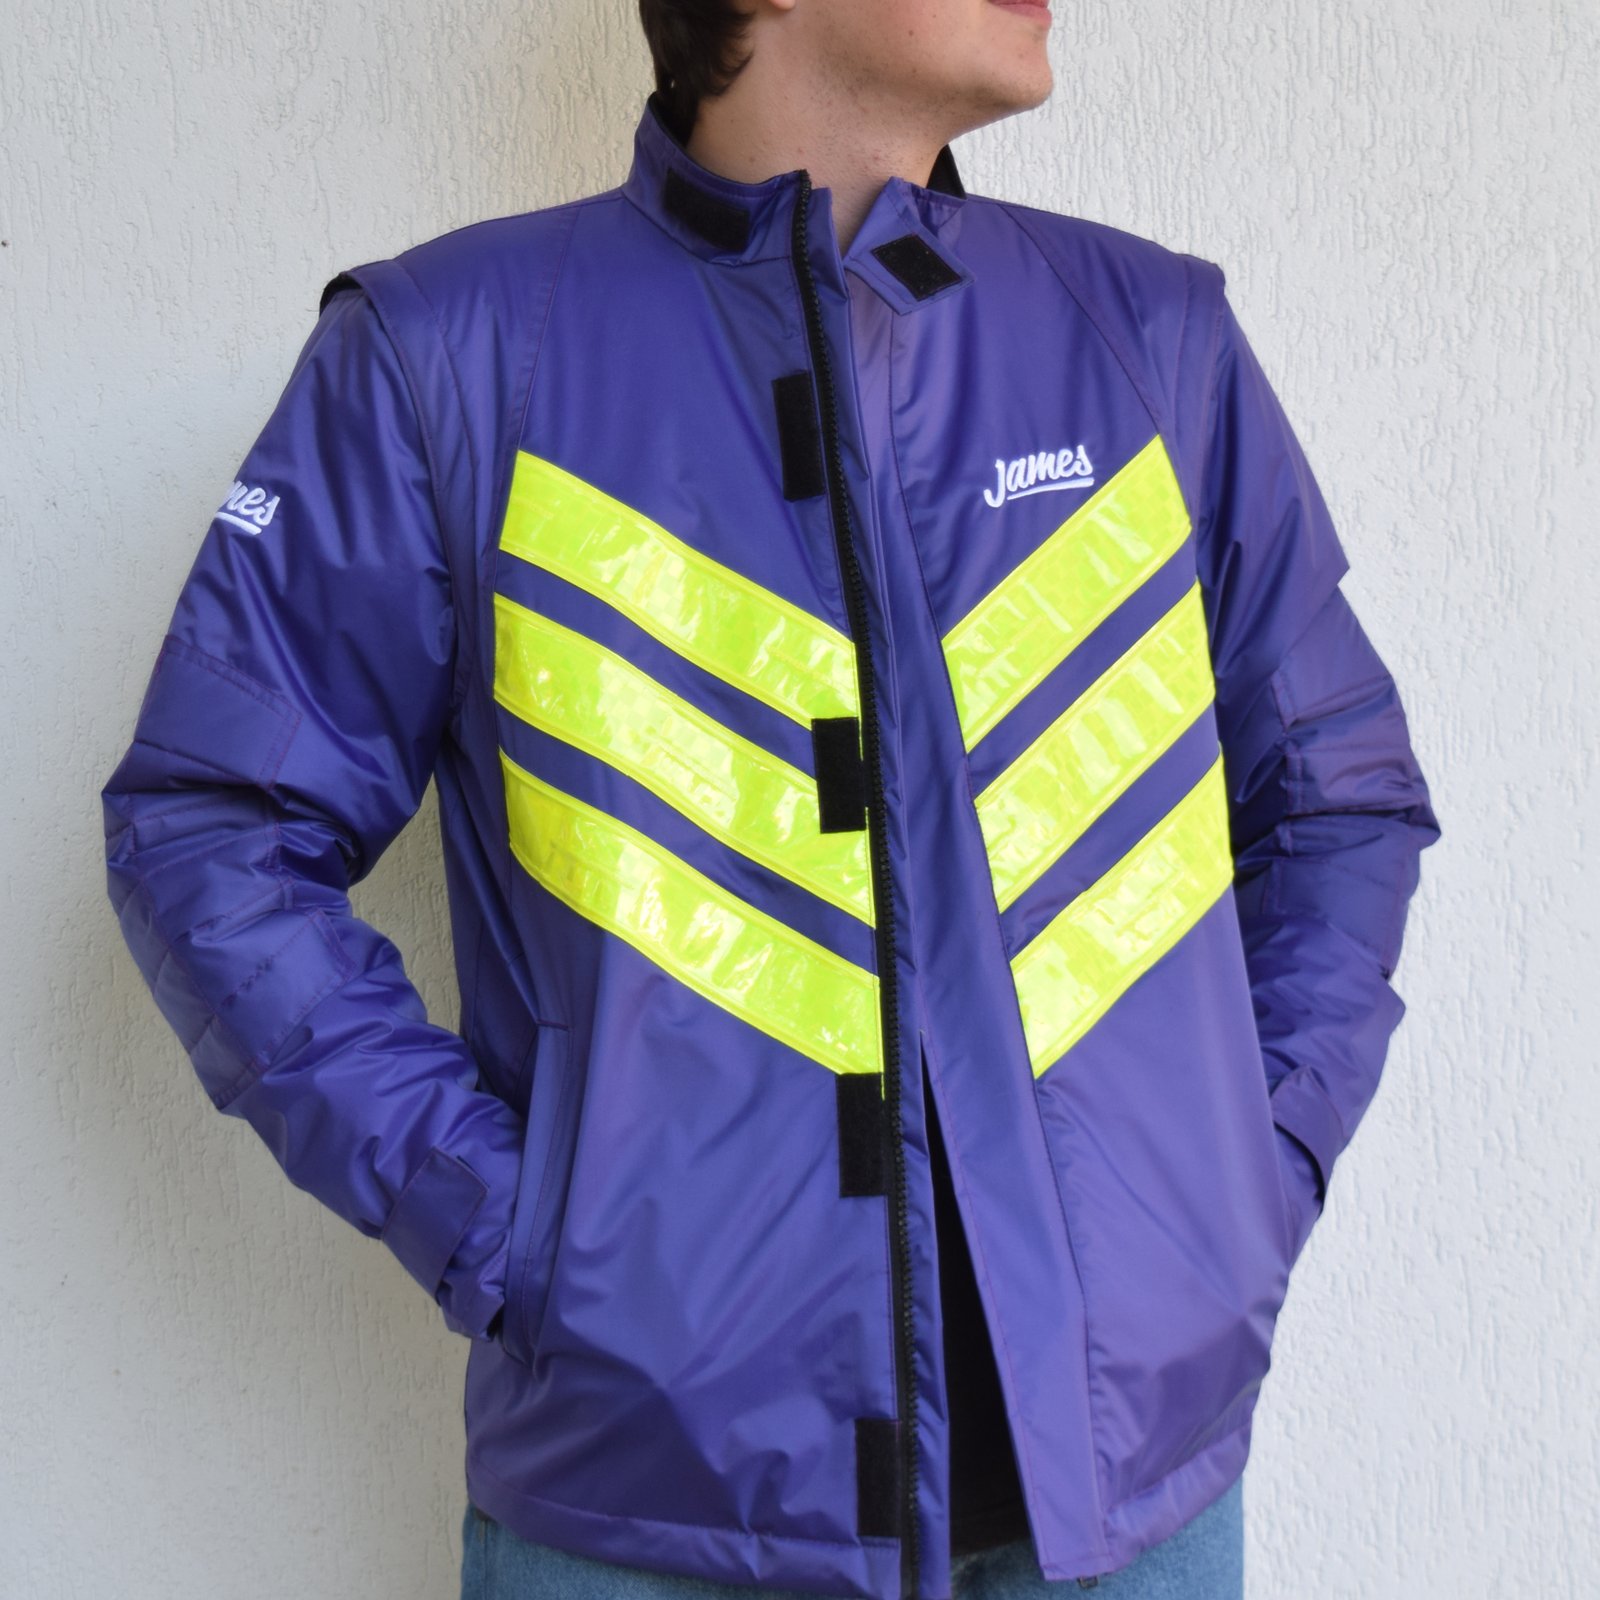 jaqueta de motoboy com faixa refletiva